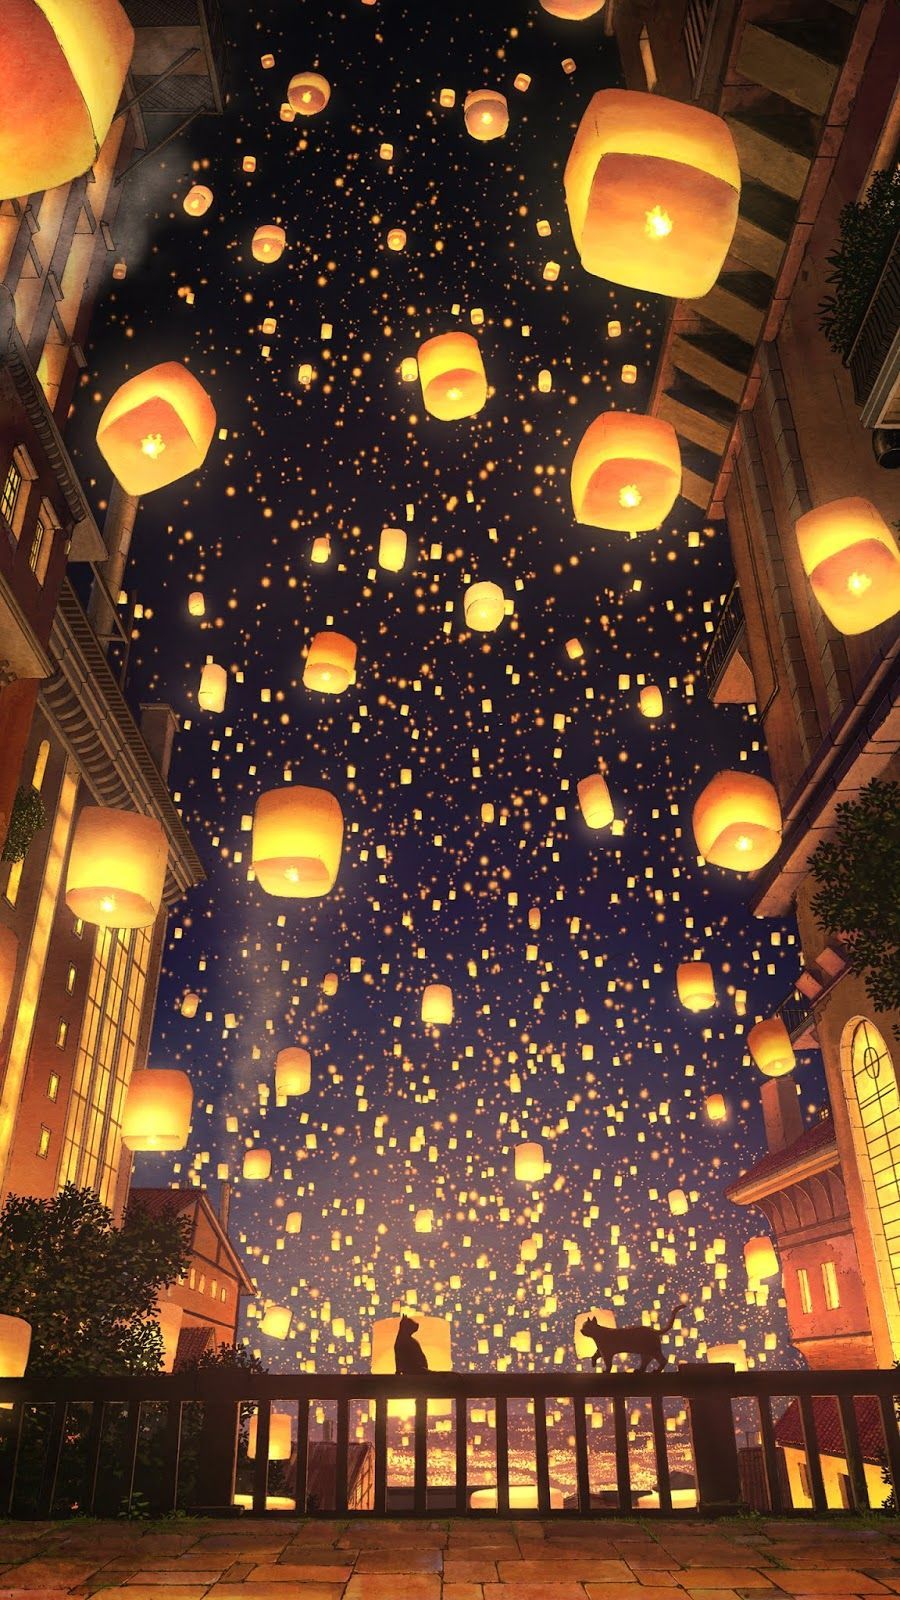 Light up the night. Disney phone wallpaper, Disney wallpaper